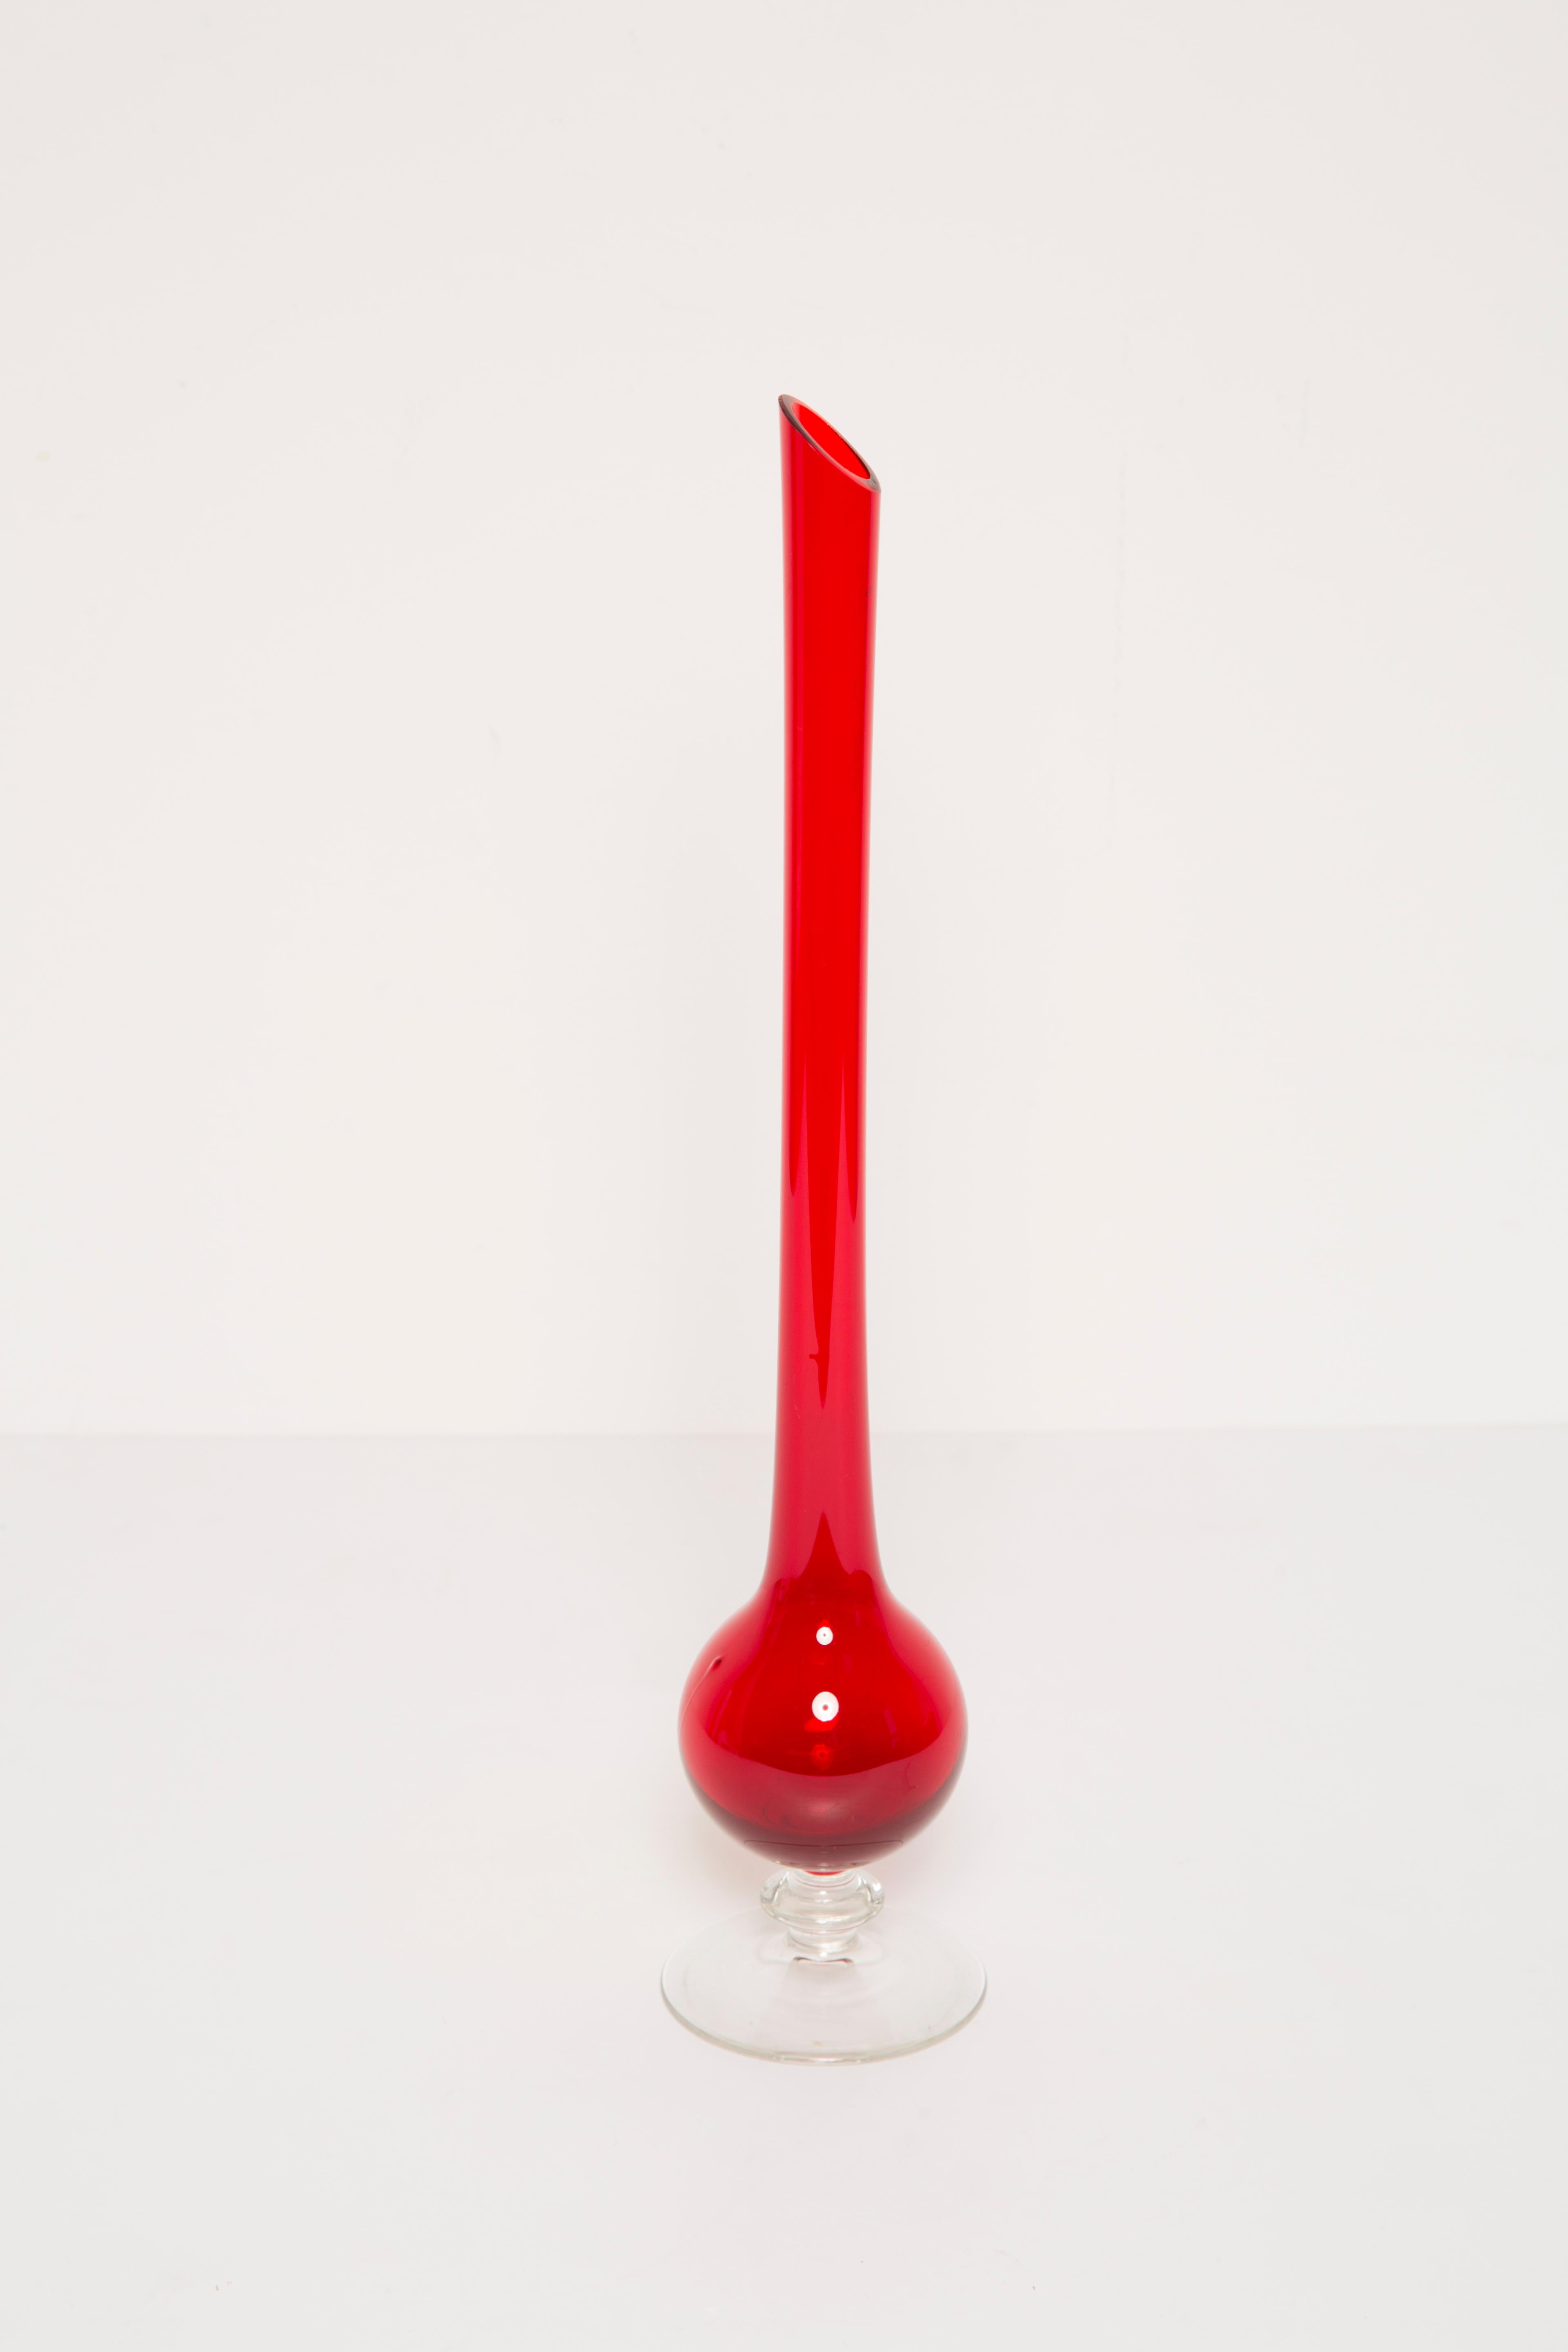 Midcentury Vintage Slim Red Decorative Glass Vase, Europe, 1960s For Sale 1